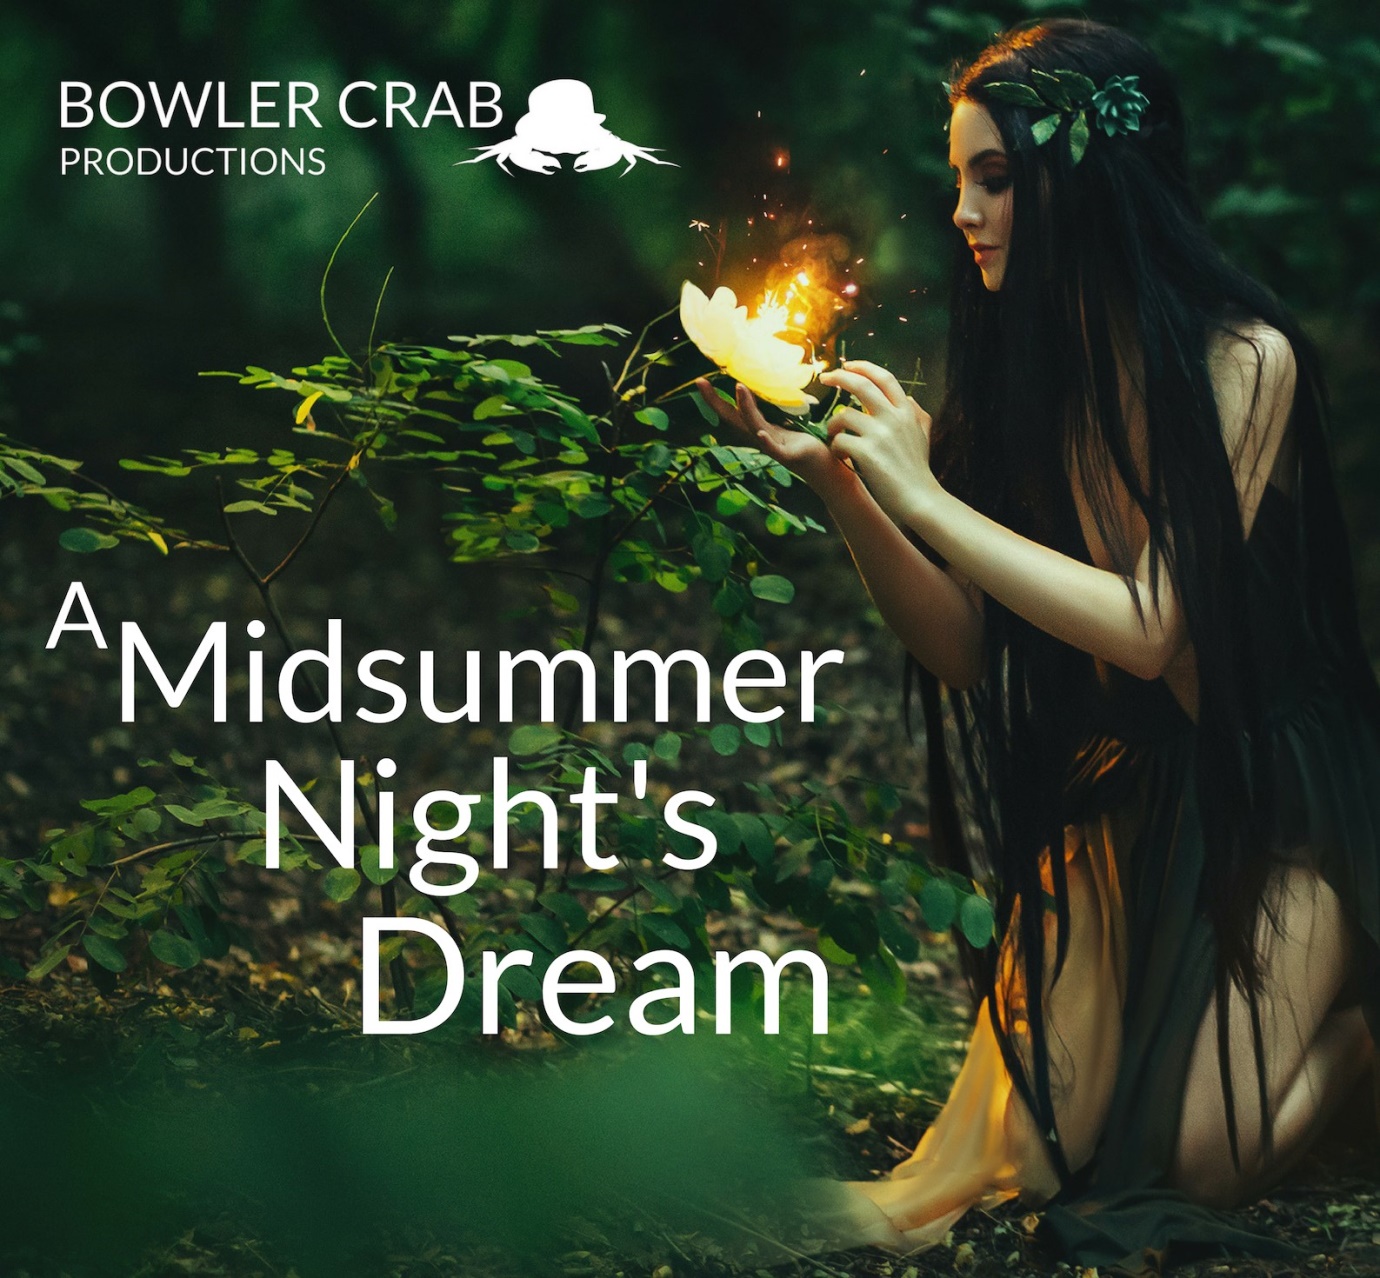 A midsummer nights lewd dream.